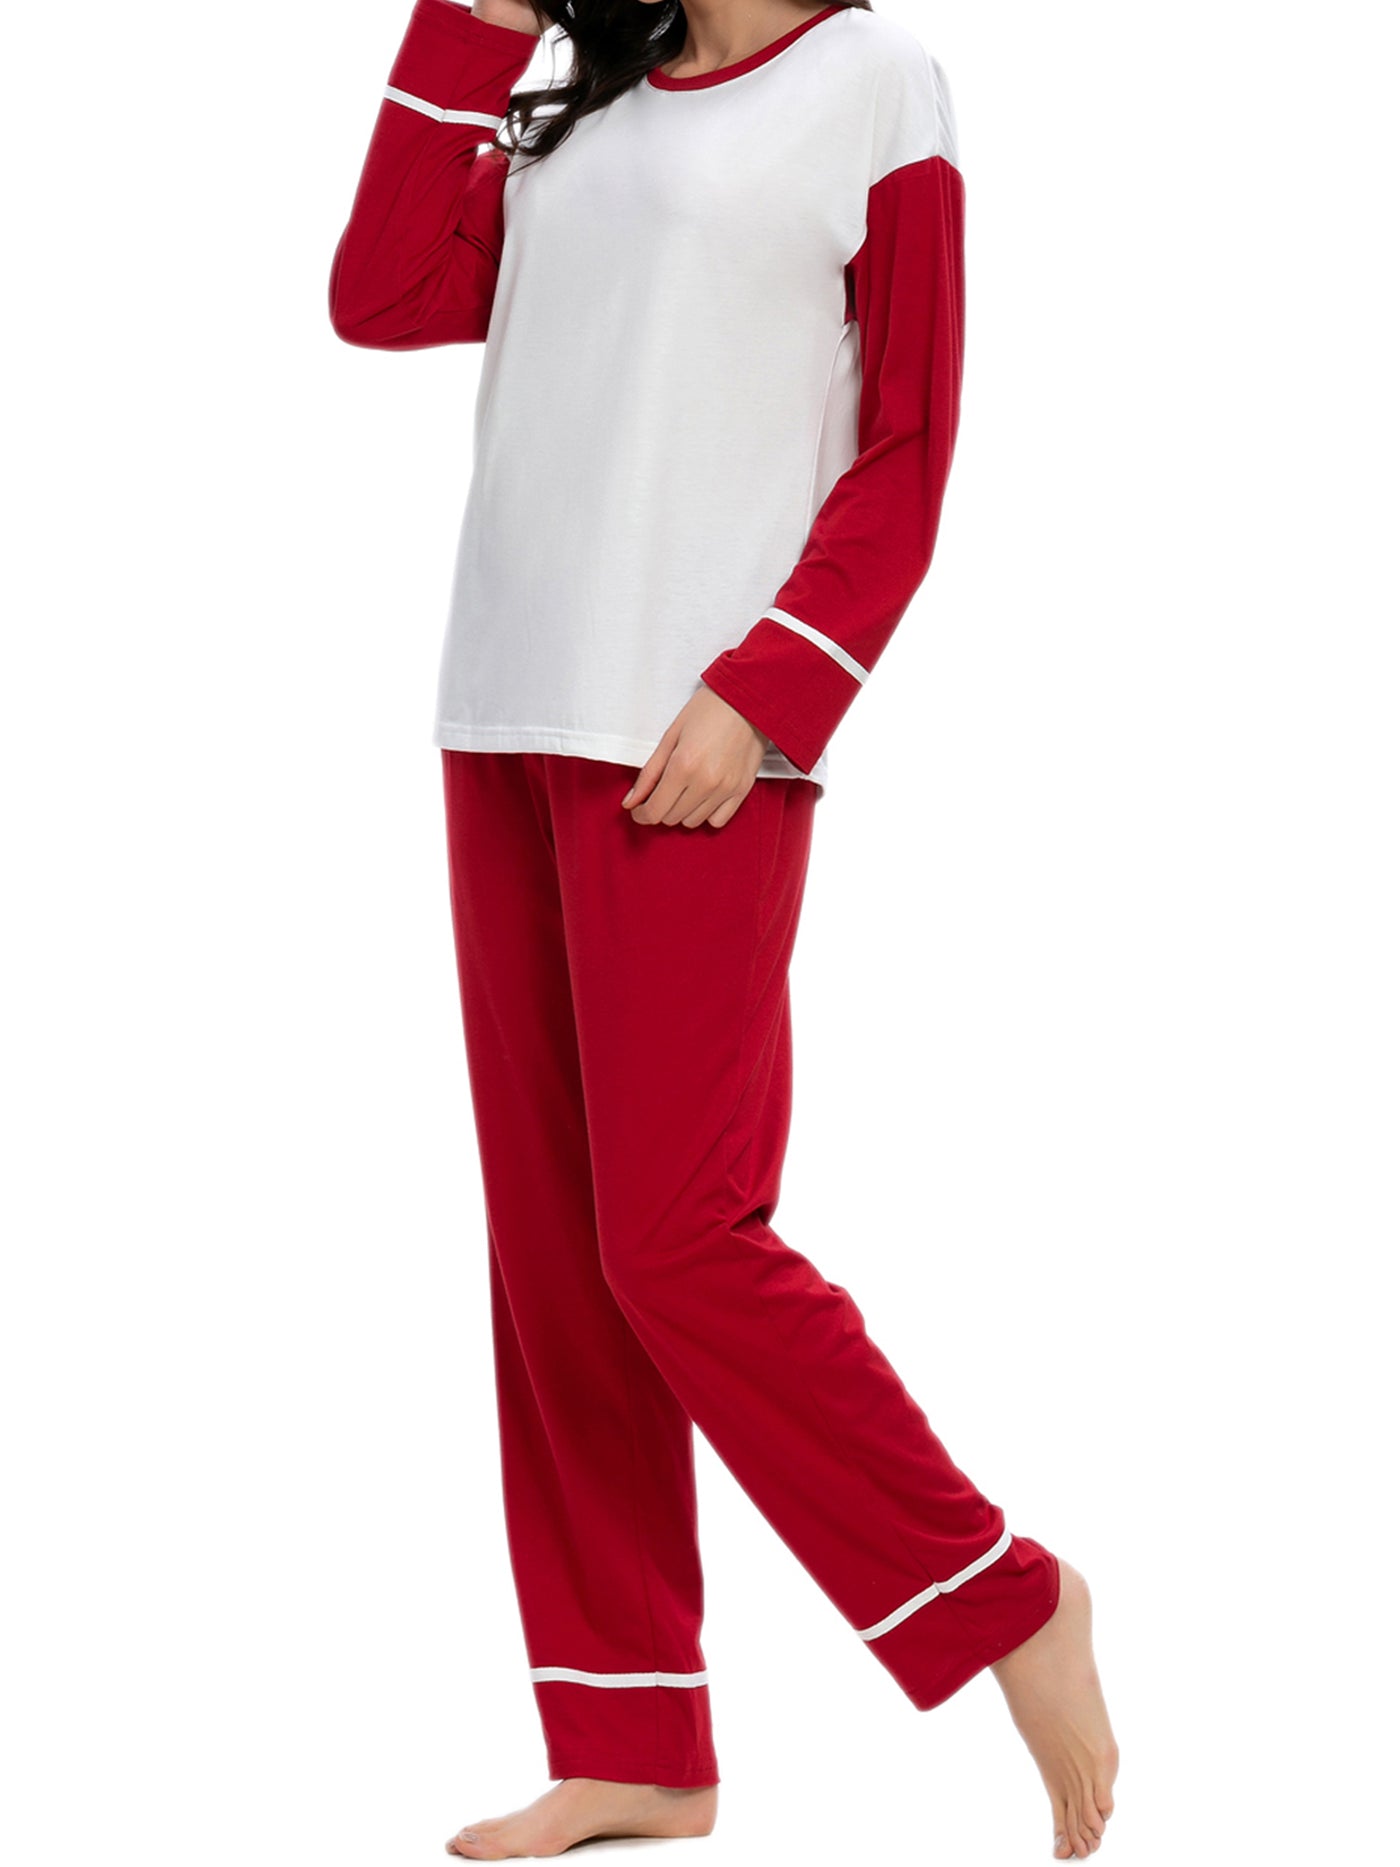 Bublédon Sleepwear Round Neck Nightwear with Pants Loungewear Pajama Set